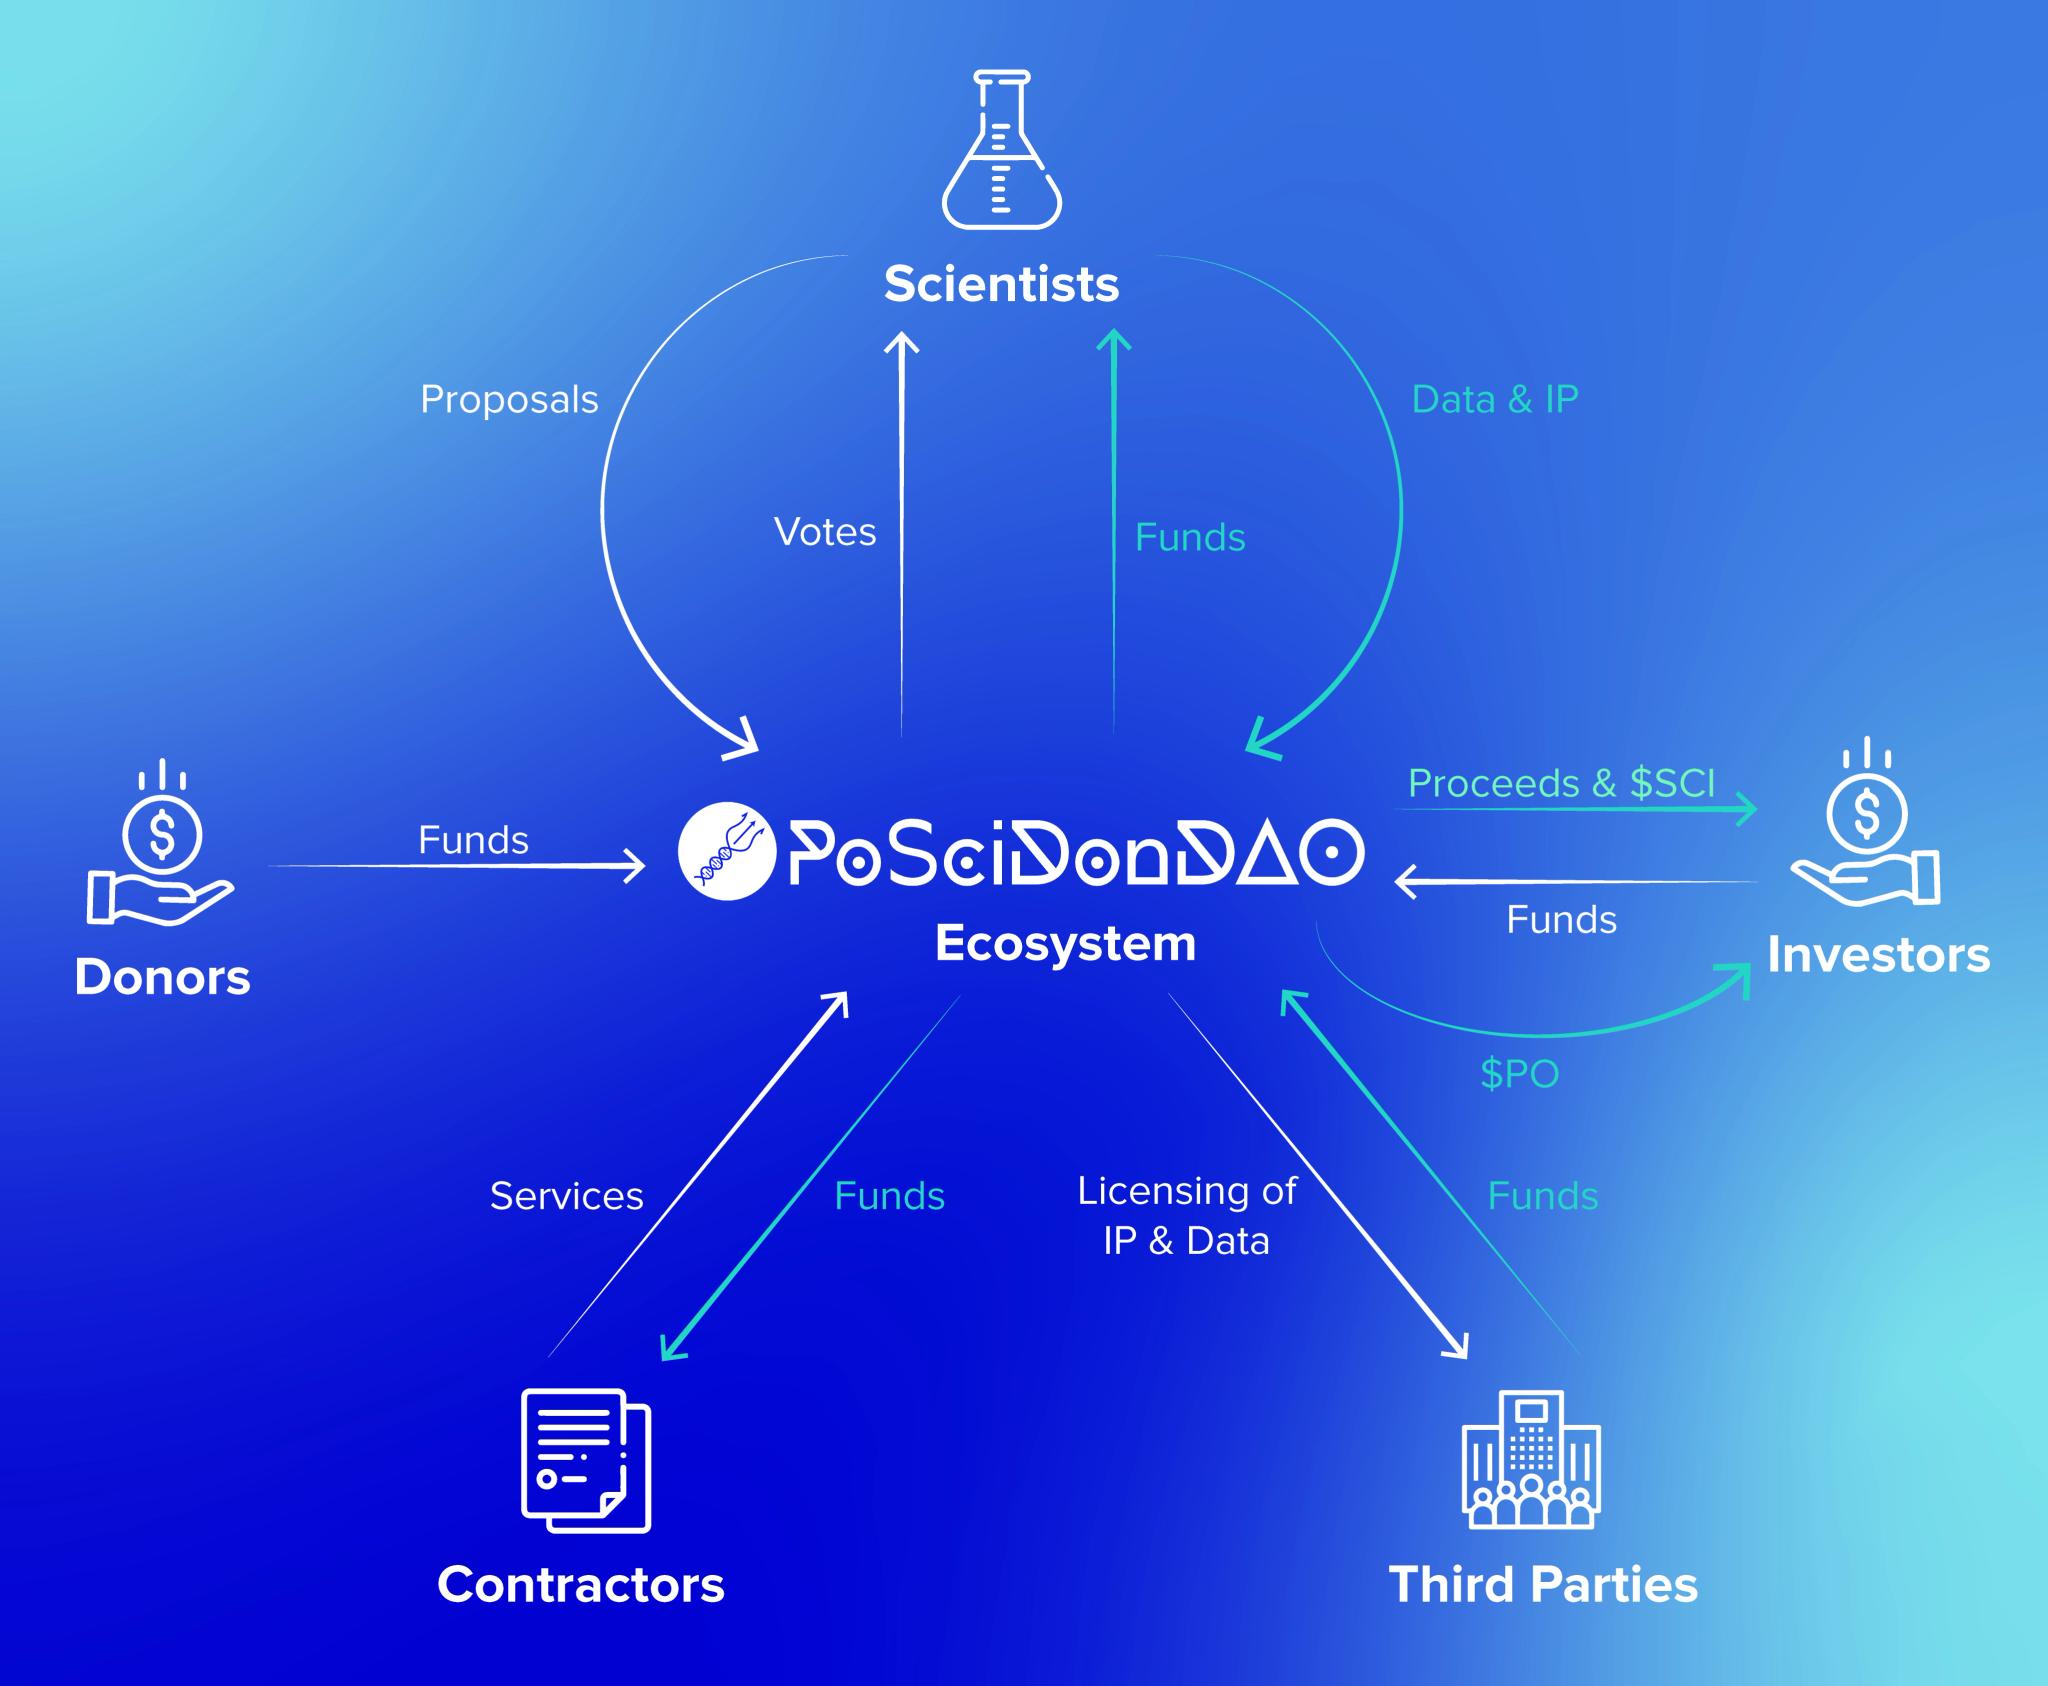 PoSciDonDAO's ecosystem streamlining personalized medicine research funding